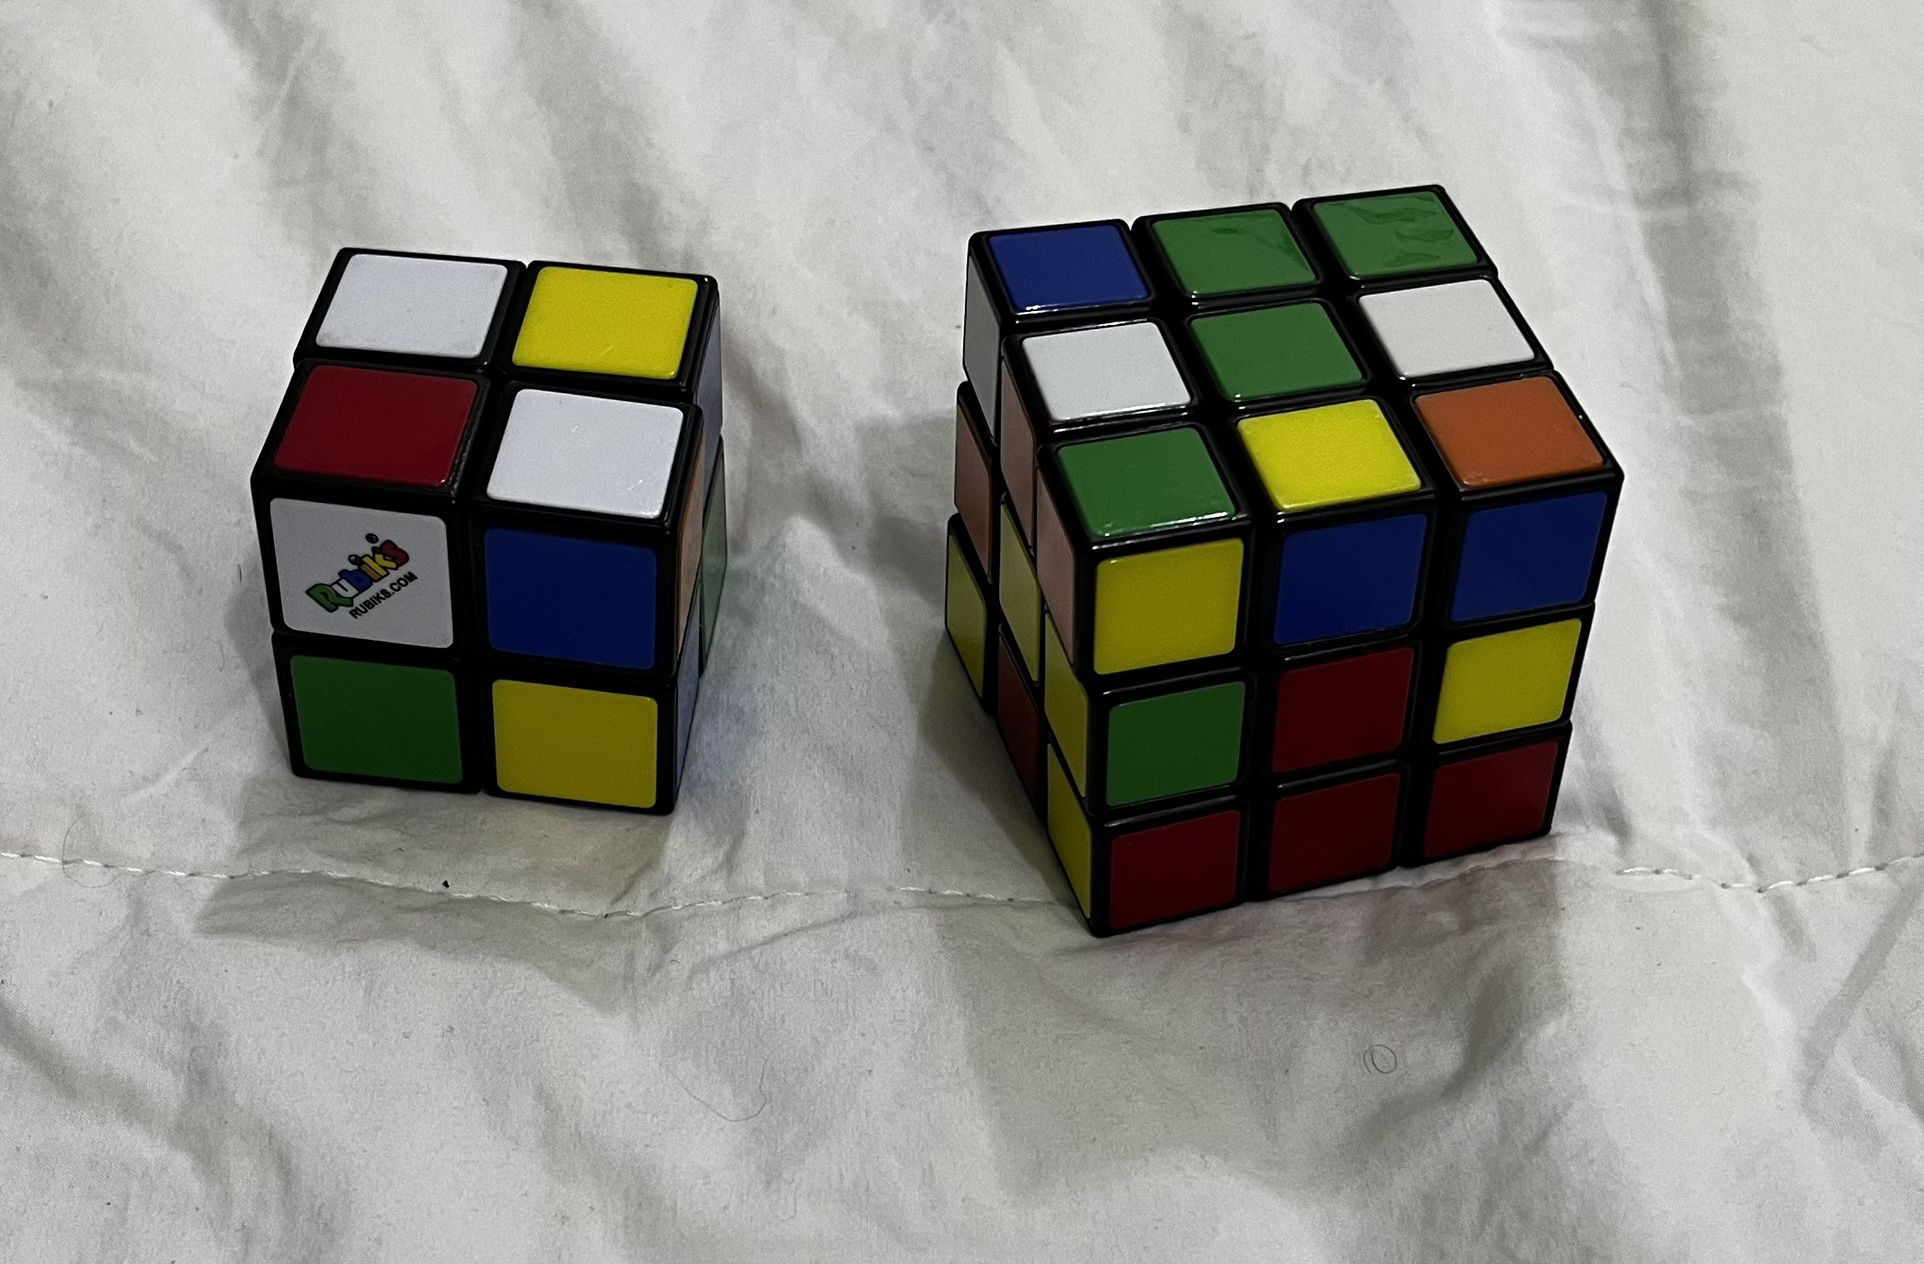 2x2 and 3x3 Rubik's rubix cubes